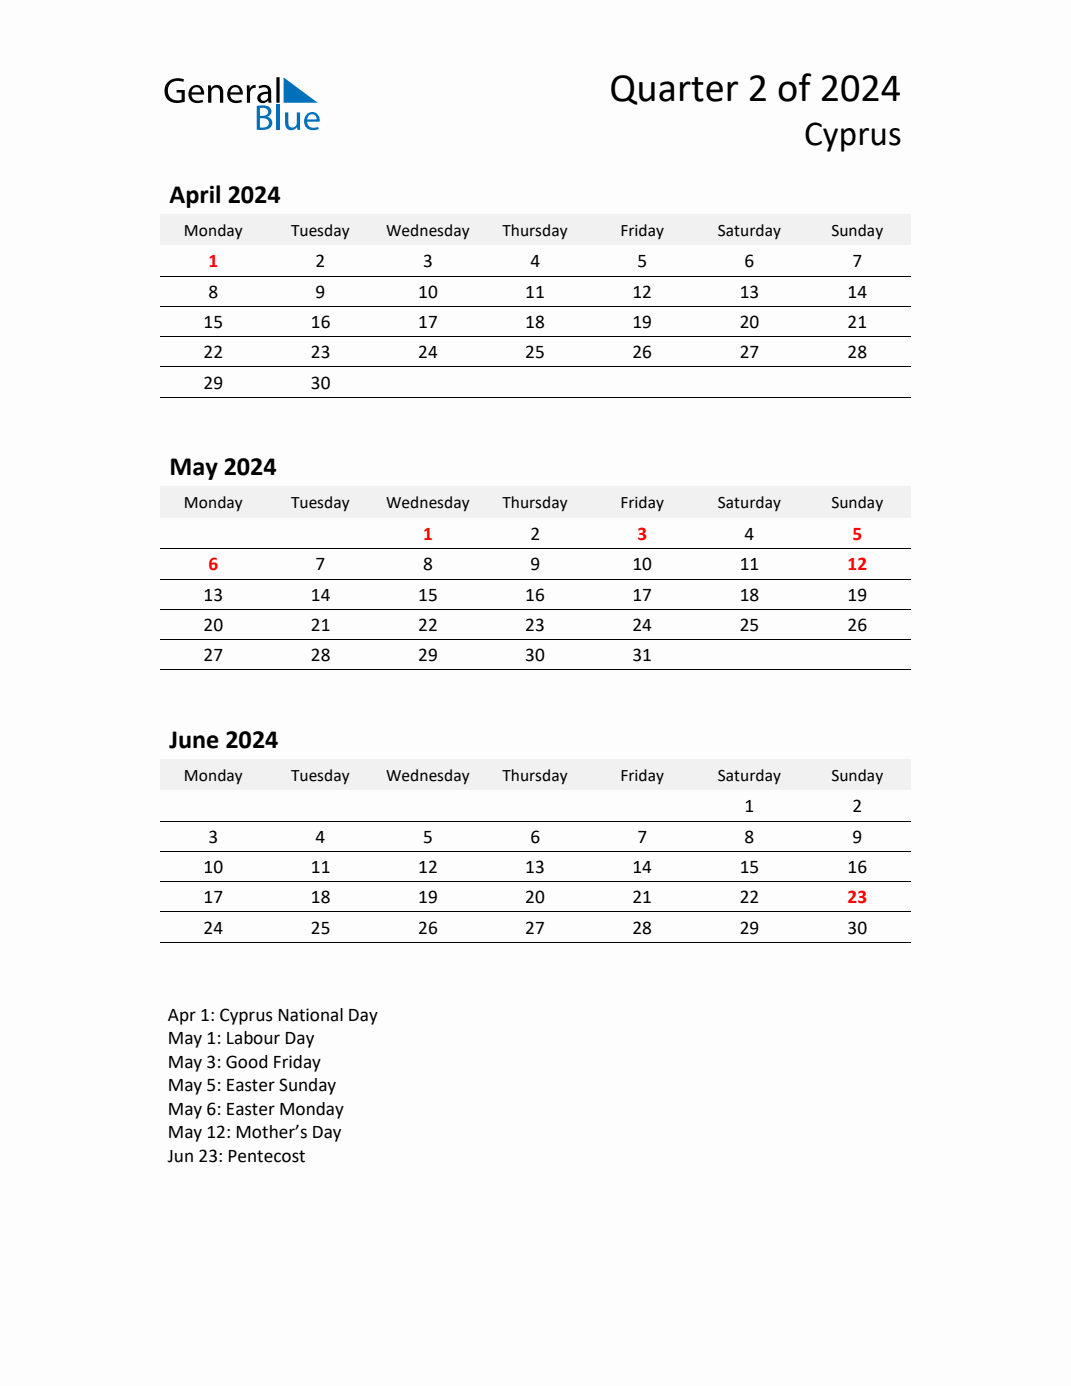 Q2 2024 Monday Start Quarterly Calendar with Cyprus Holidays